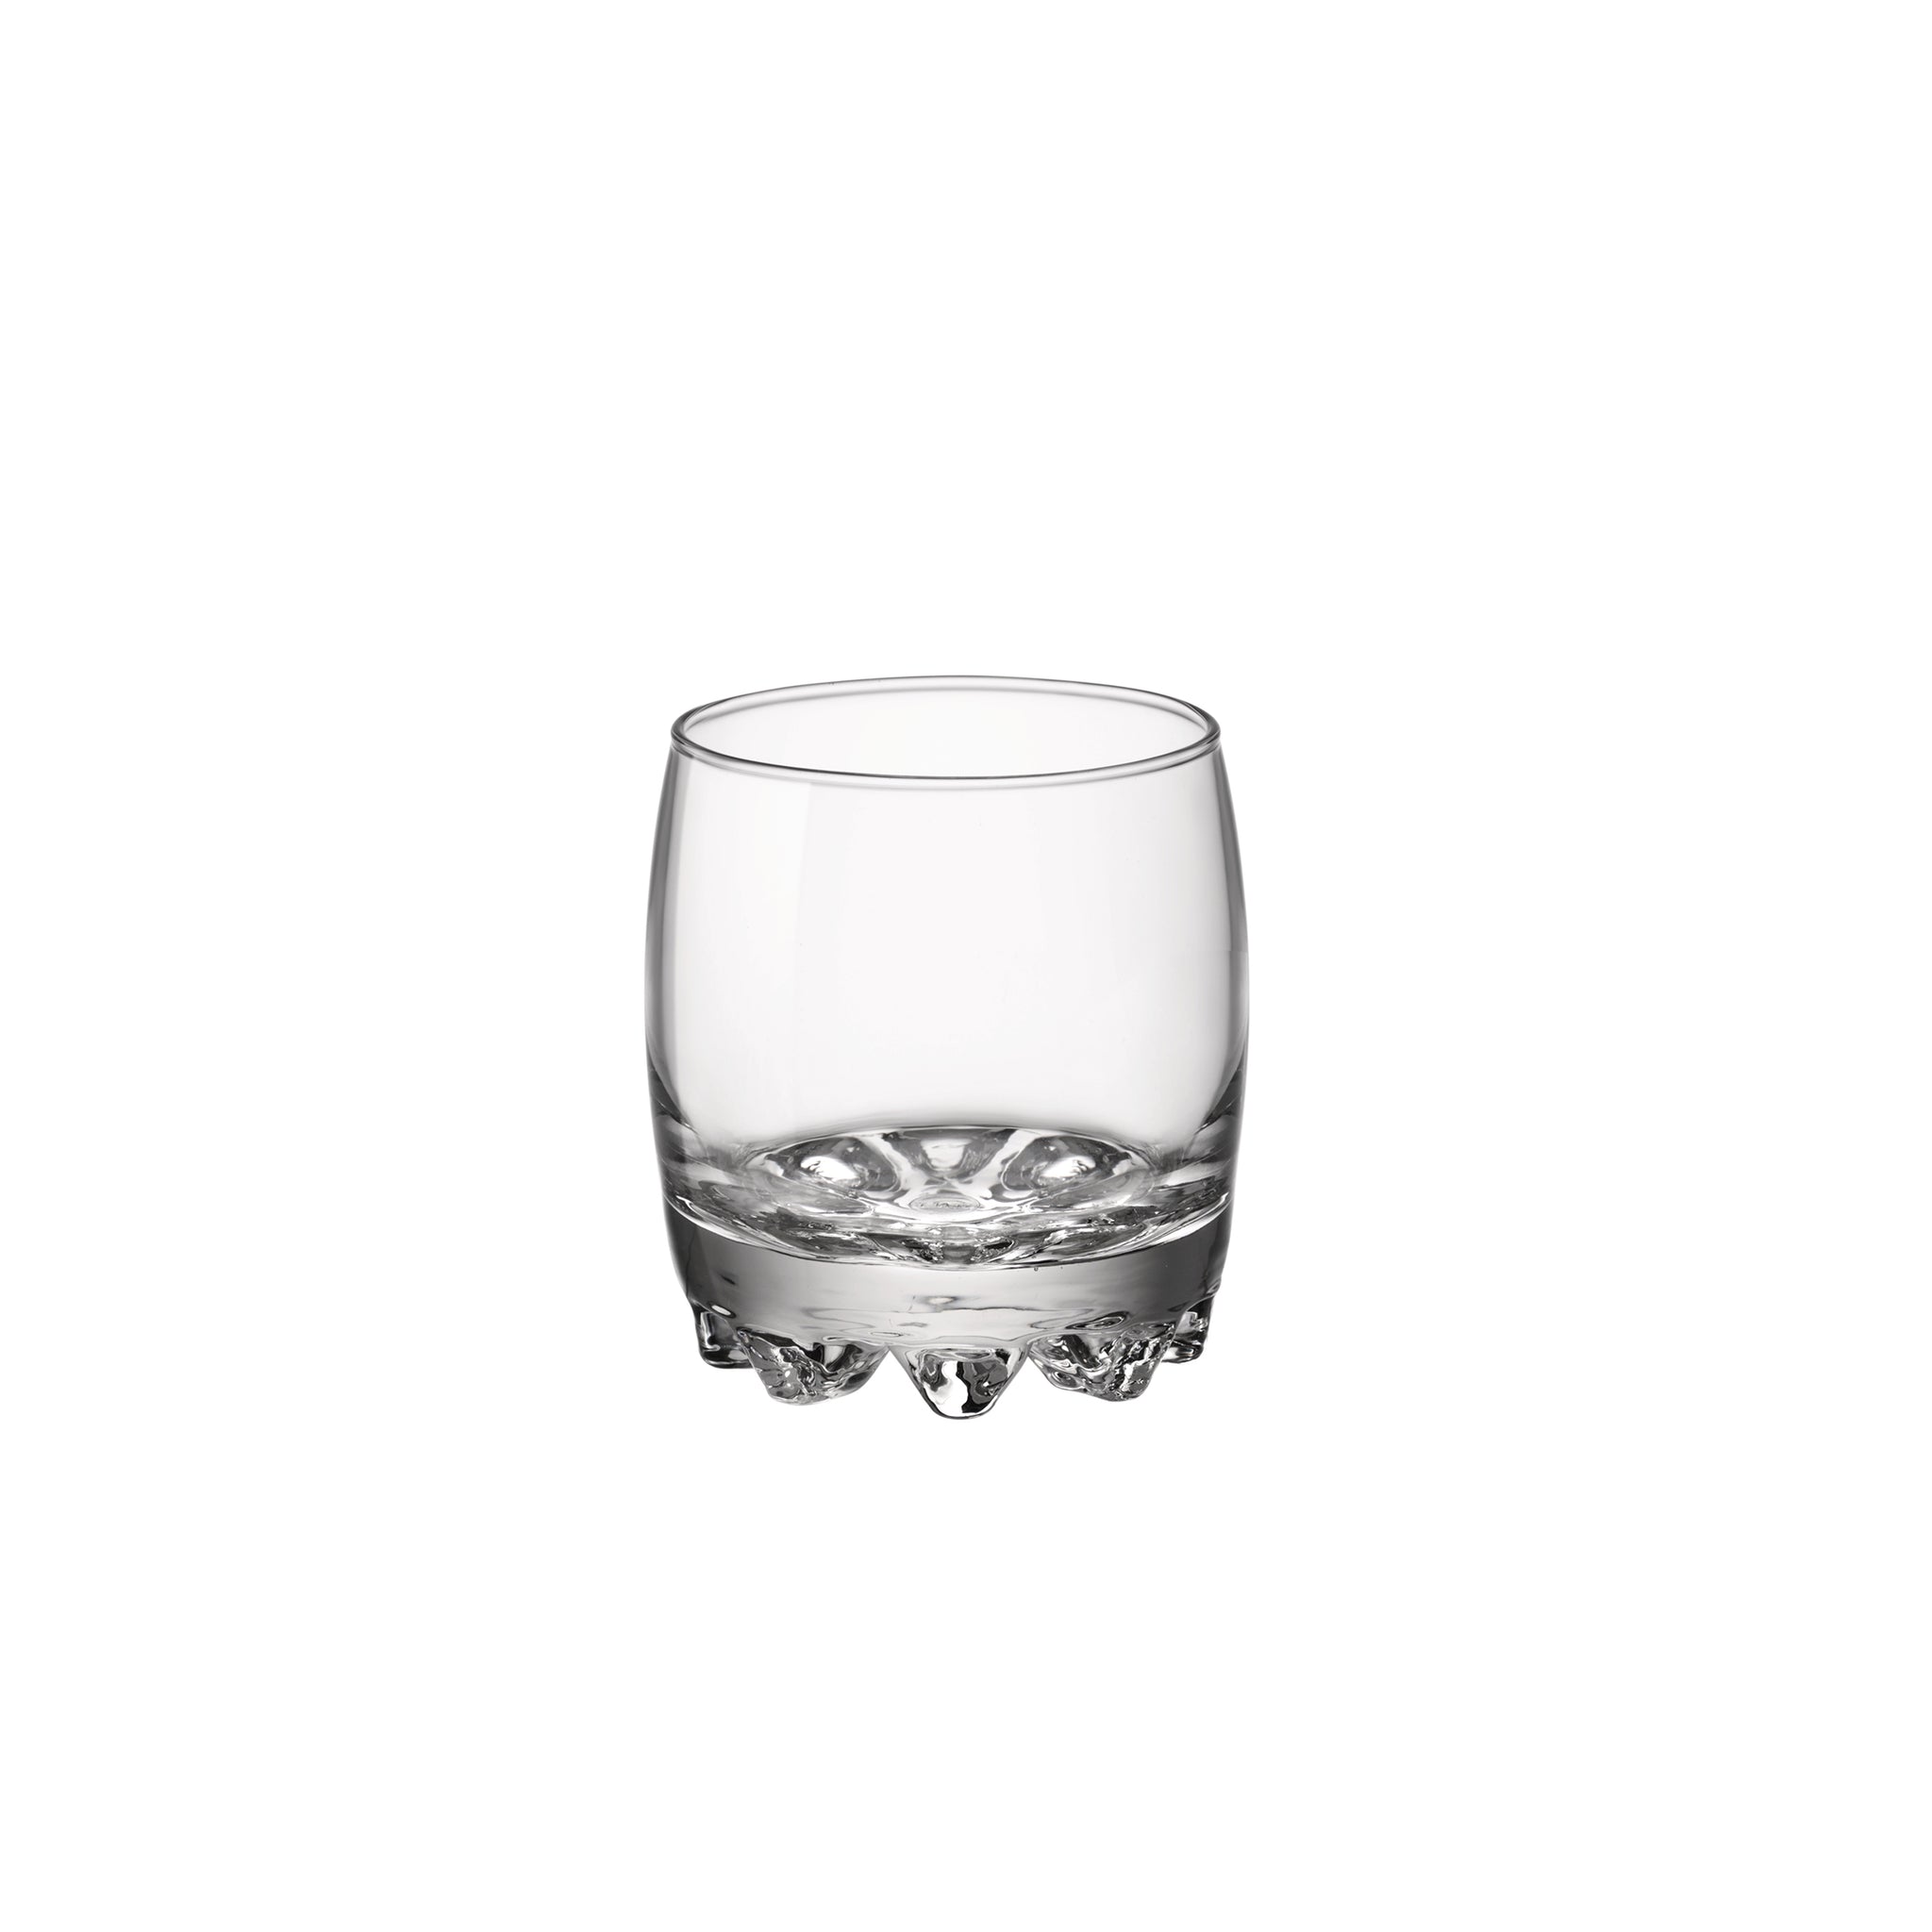 Galassia 10 oz. Rocks Drinking Glasses (Set of 6)